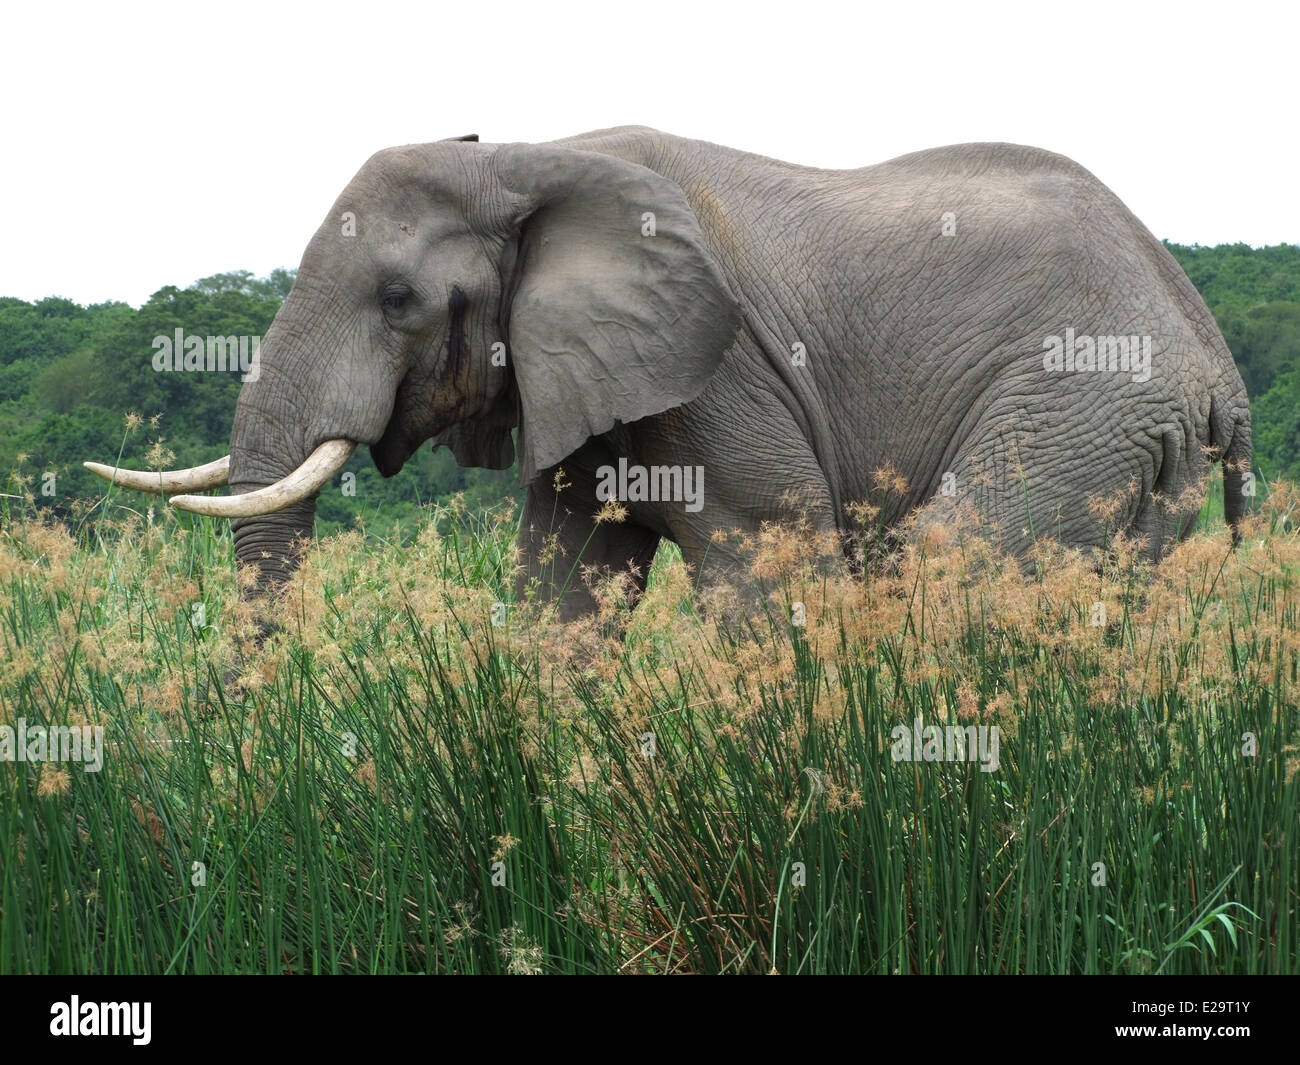 sideways shot of a elephant in Uganda (Africa) while walking through high grass Stock Photo